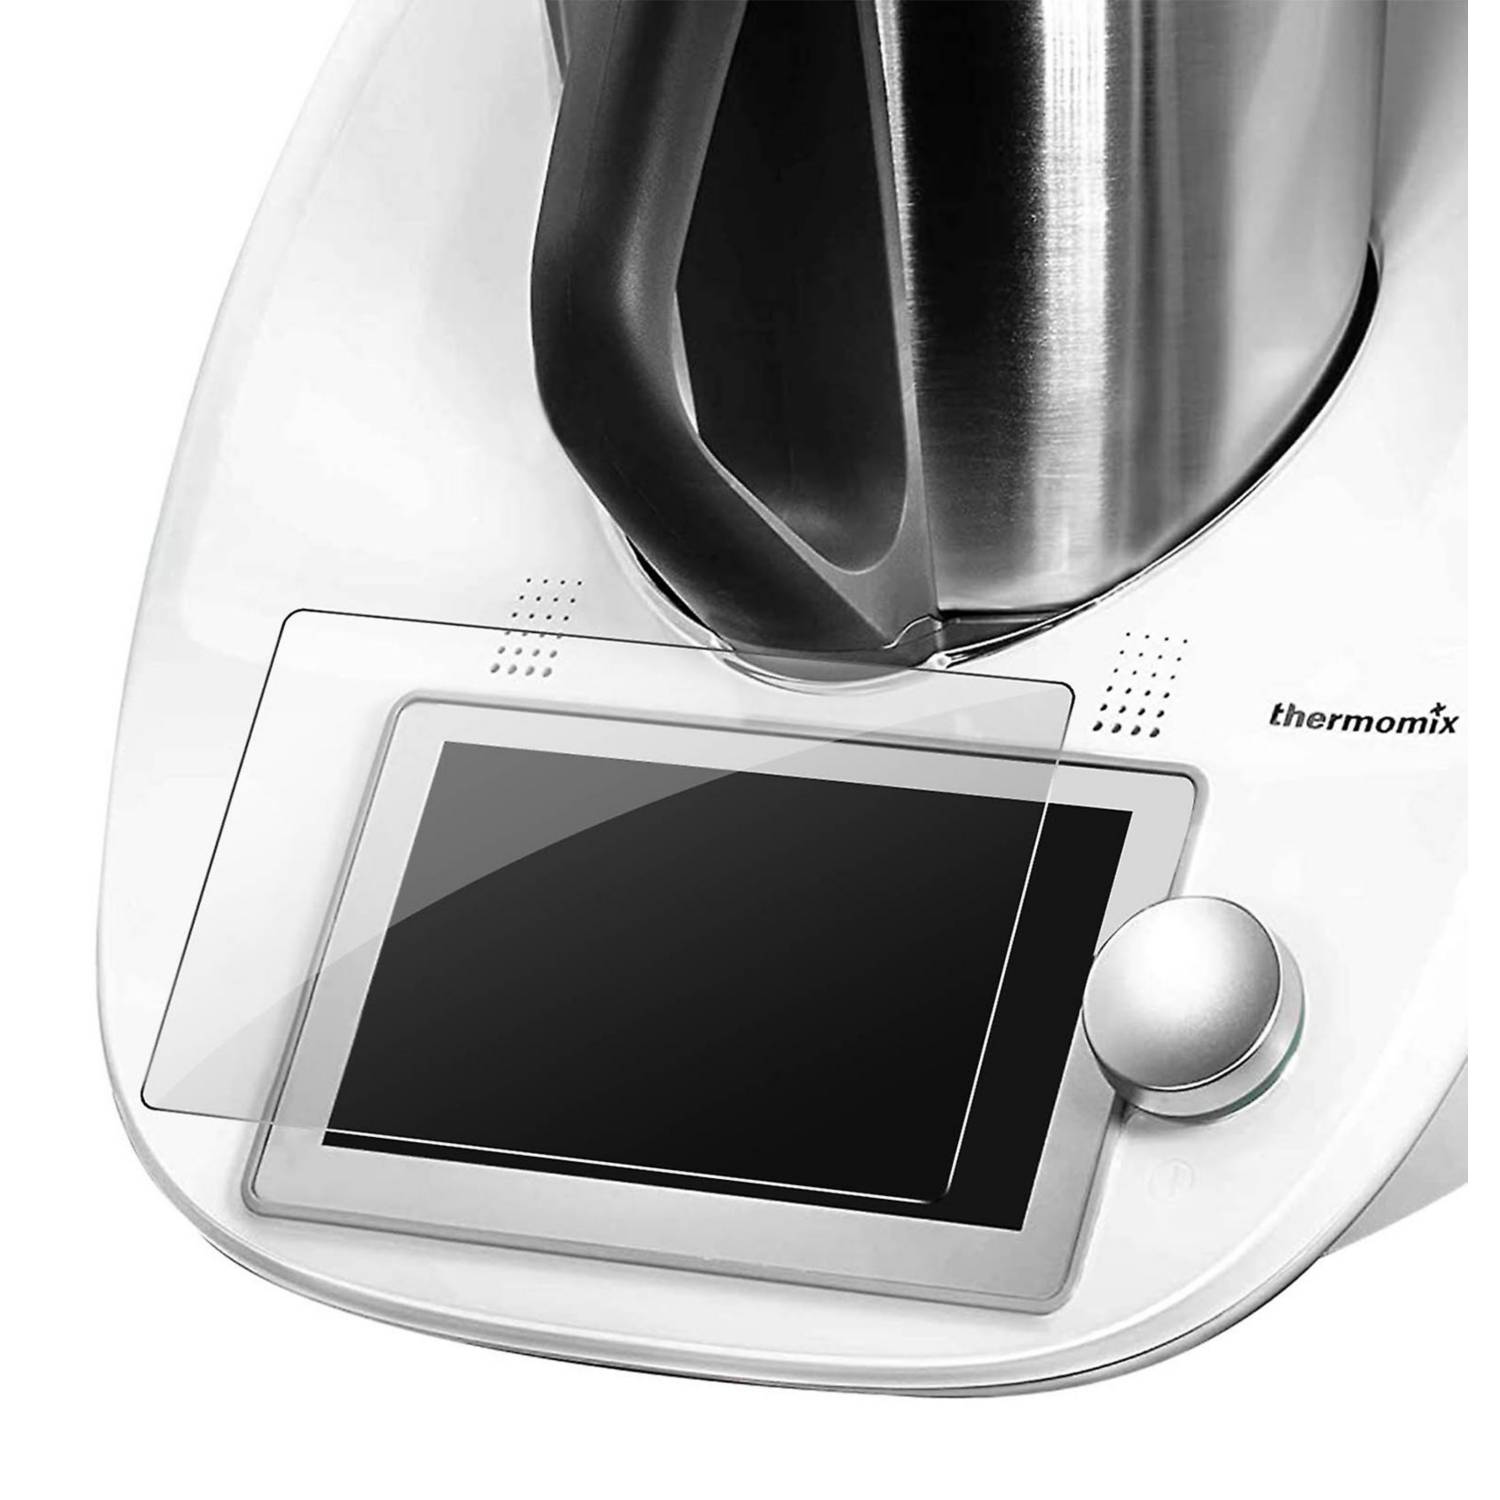 Protector de pantalla para Thermomix TM6 accesorios, lámina